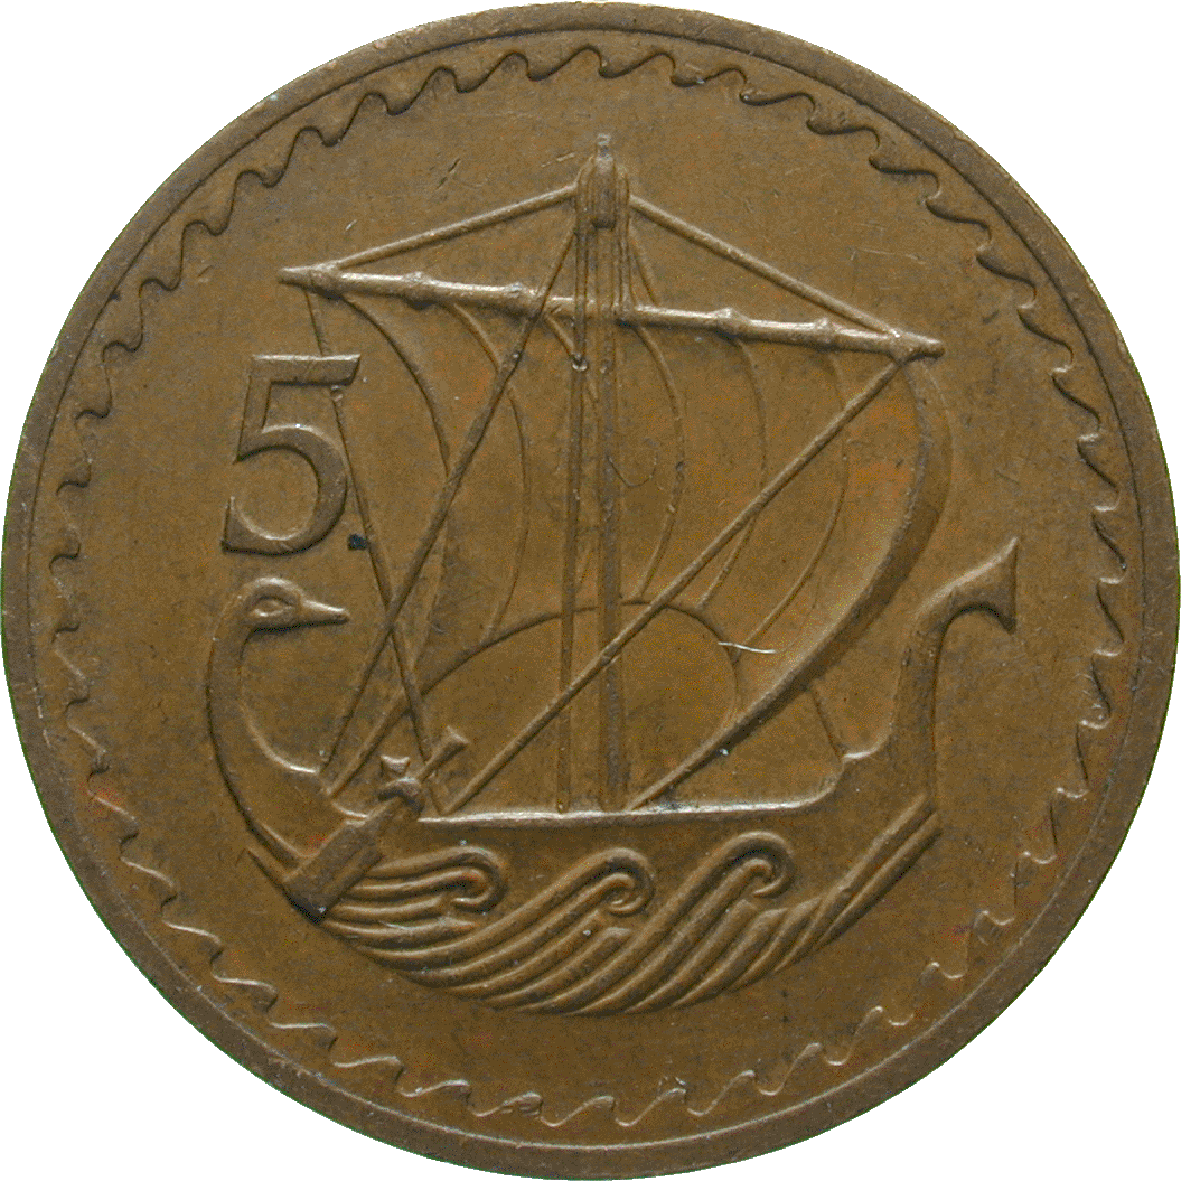 Republic of Cyprus, 5 Mils 1963 (reverse)